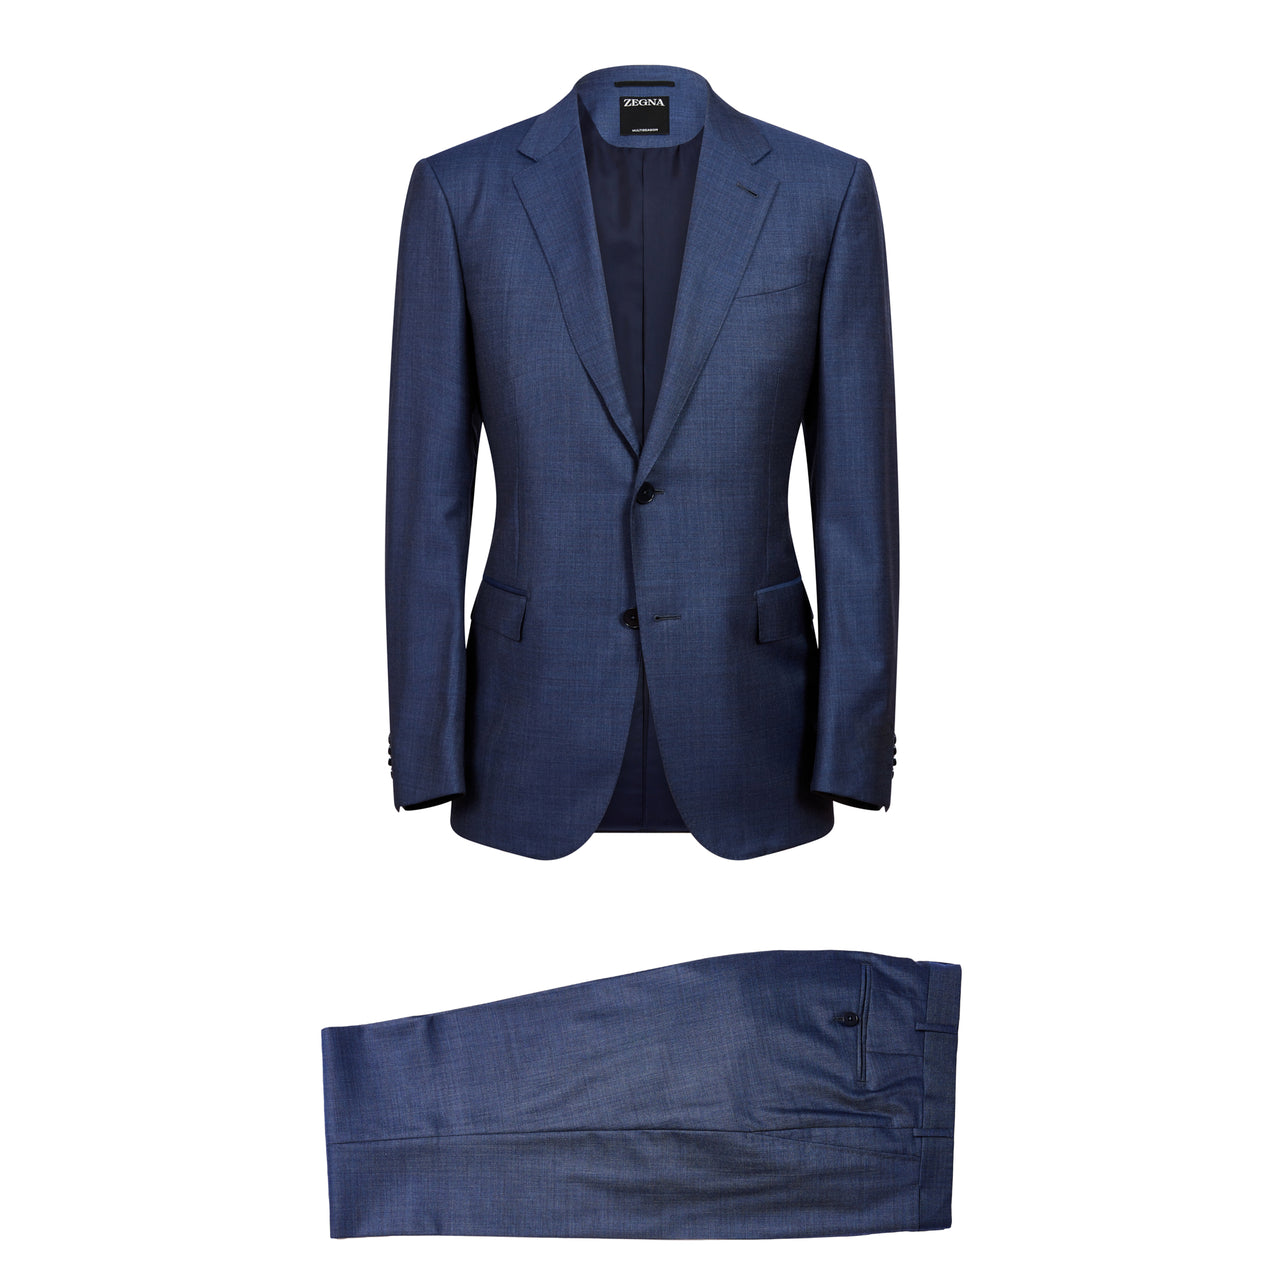 ERMENEGILDO ZEGNA Multi Season Sartorial Suit SOLID BLUE REG